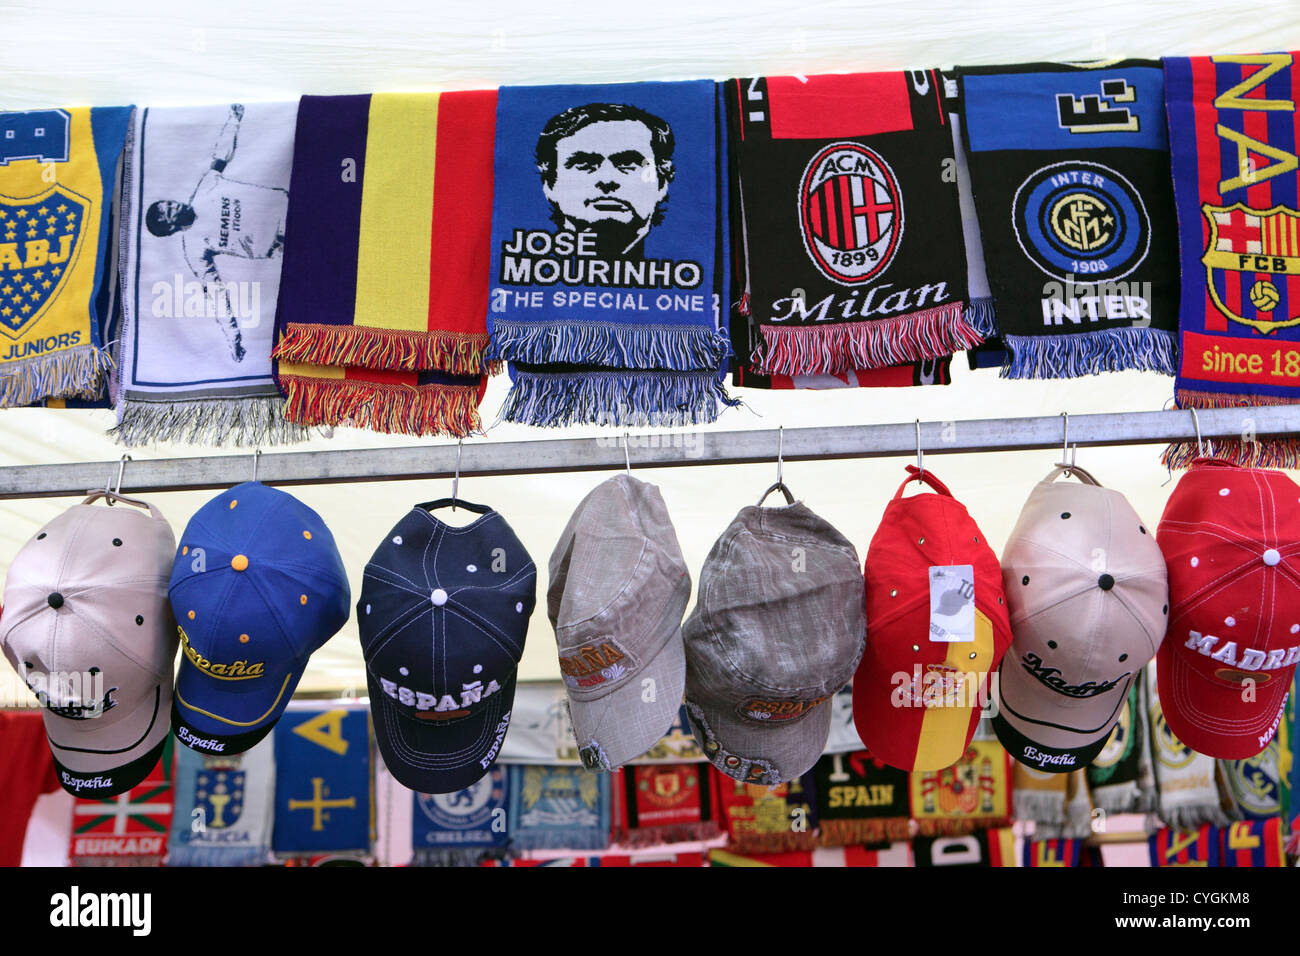 Street market, El Rastro, Madrid, Spain. Football souvenirs, scarves & baseball caps. Stock Photo